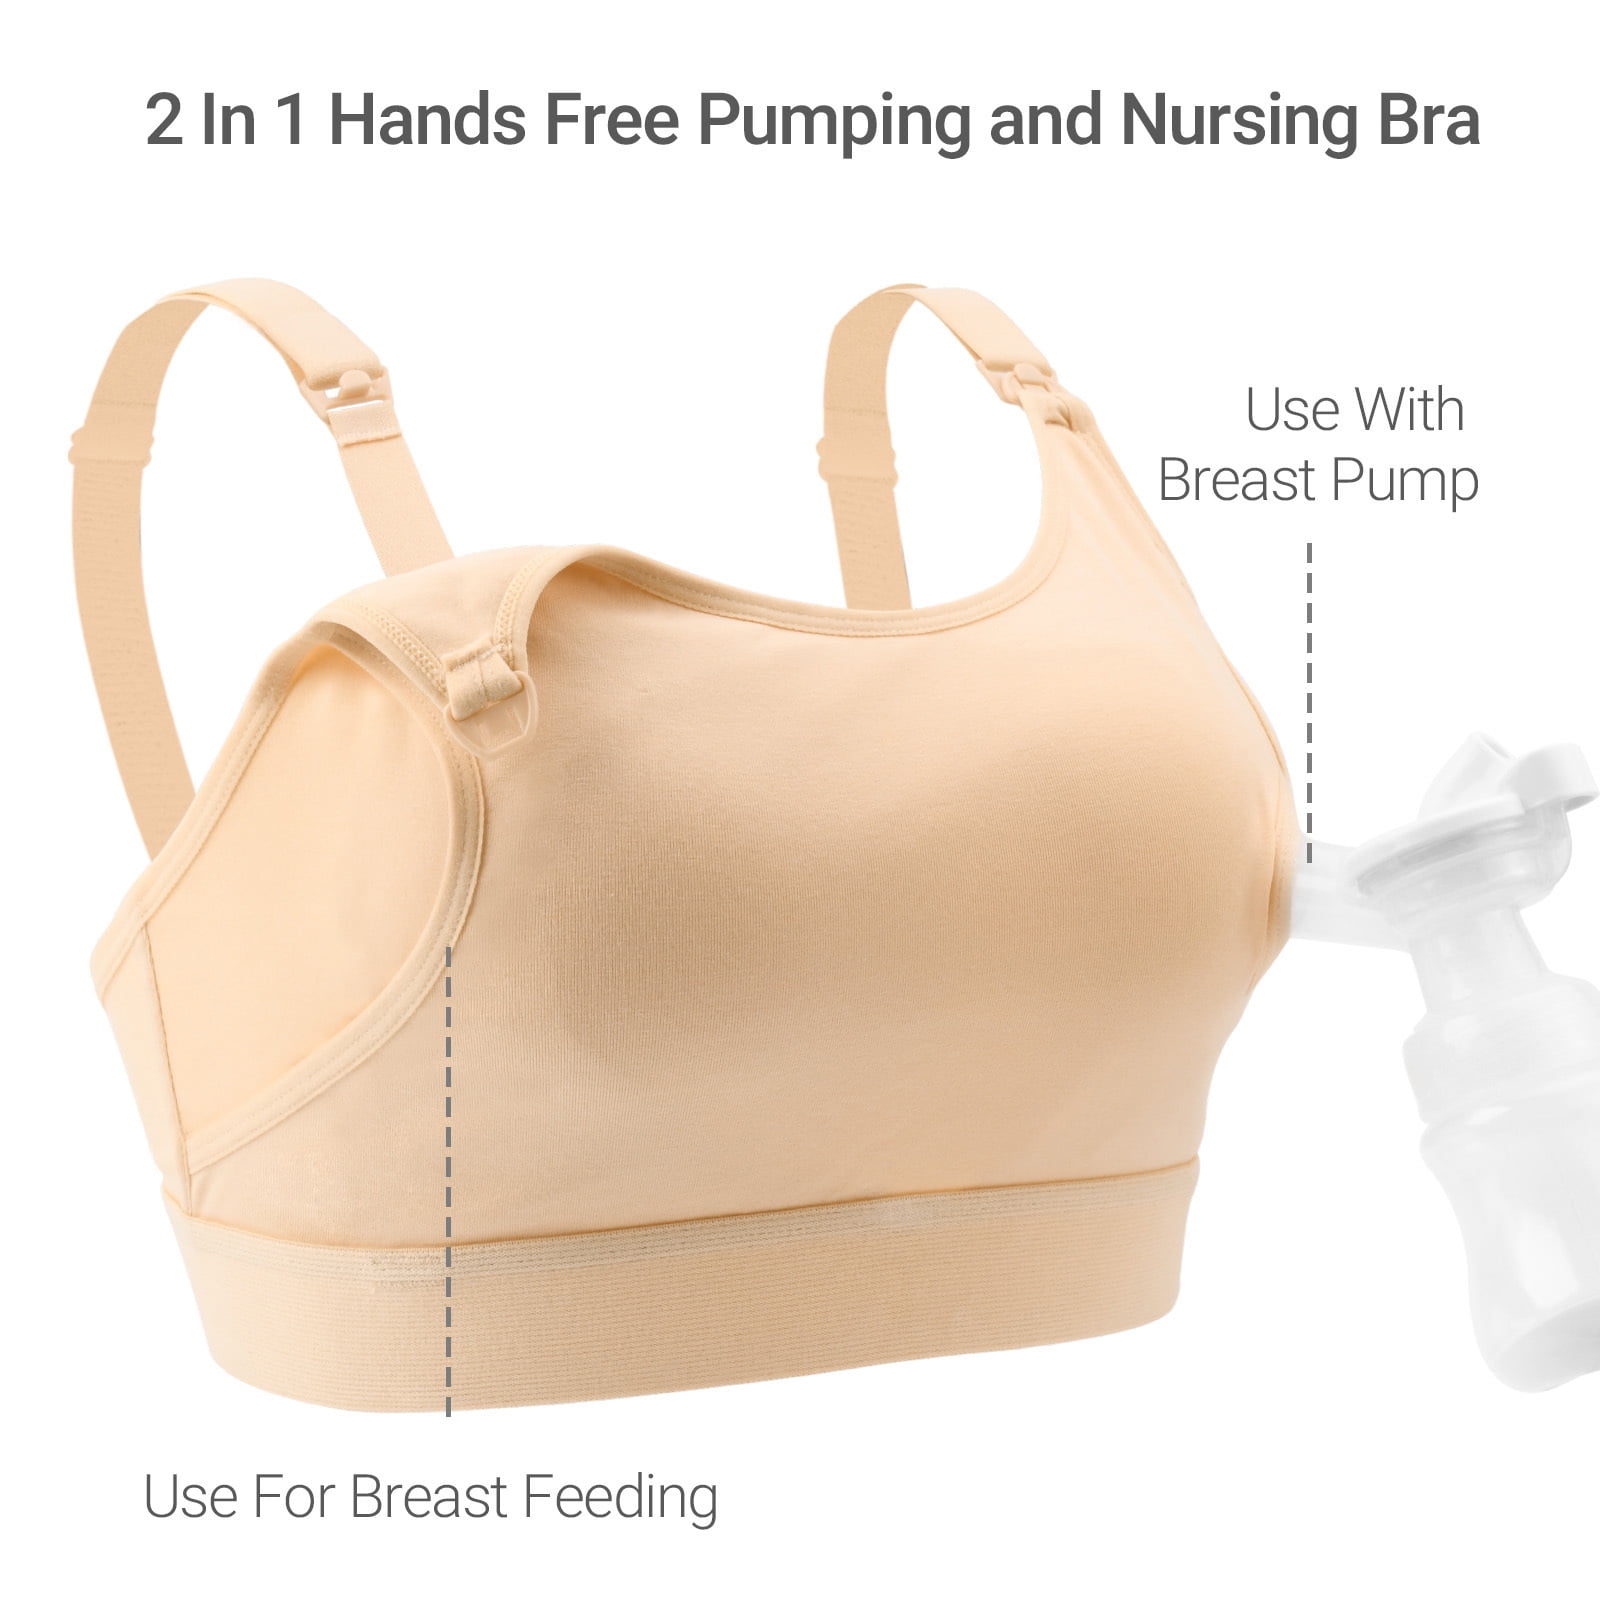 Hands Free Pumping Bra,adjustable Breast-pump Holding And Nursing